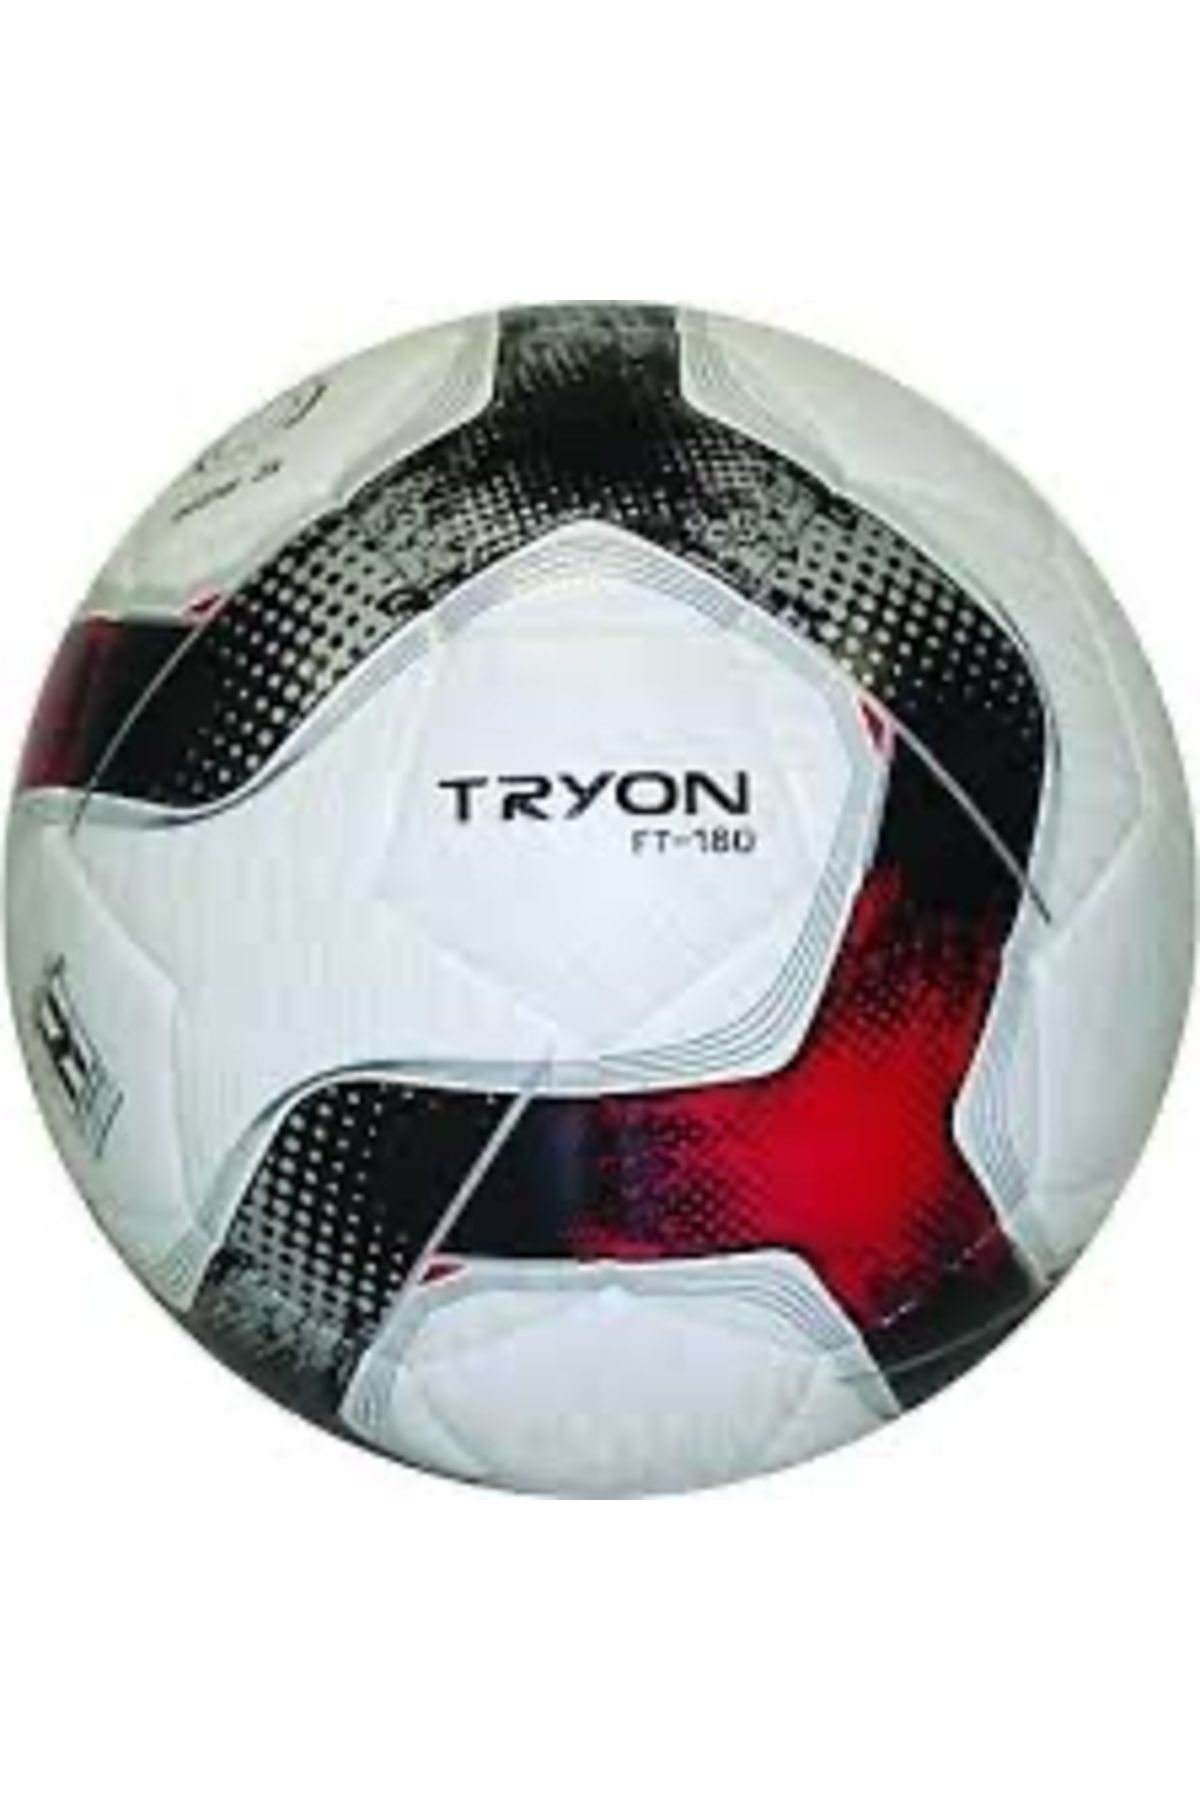 TRYON Ft180 Futbol Topu Hybrid Teknoloji